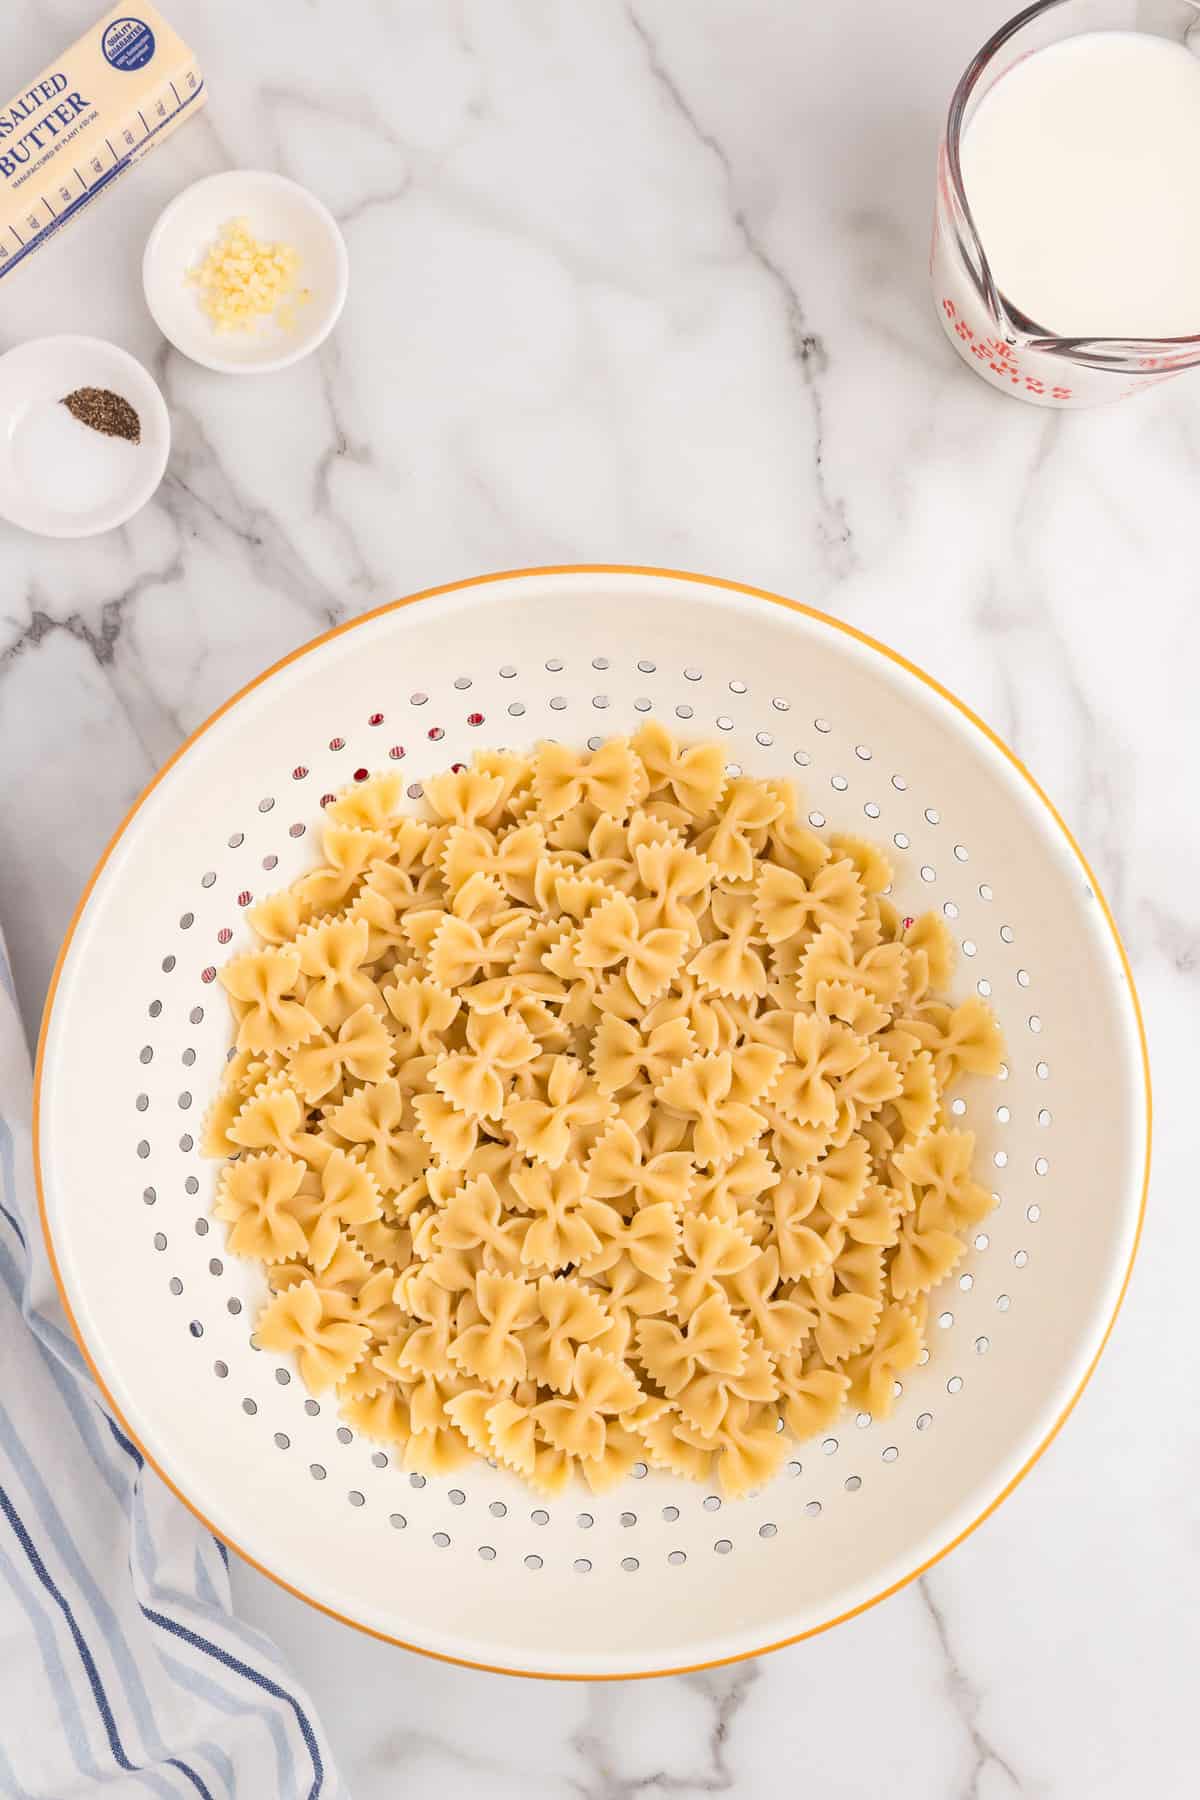 Cooked pasta in strainer for Cheesy Ham Casserole recipe